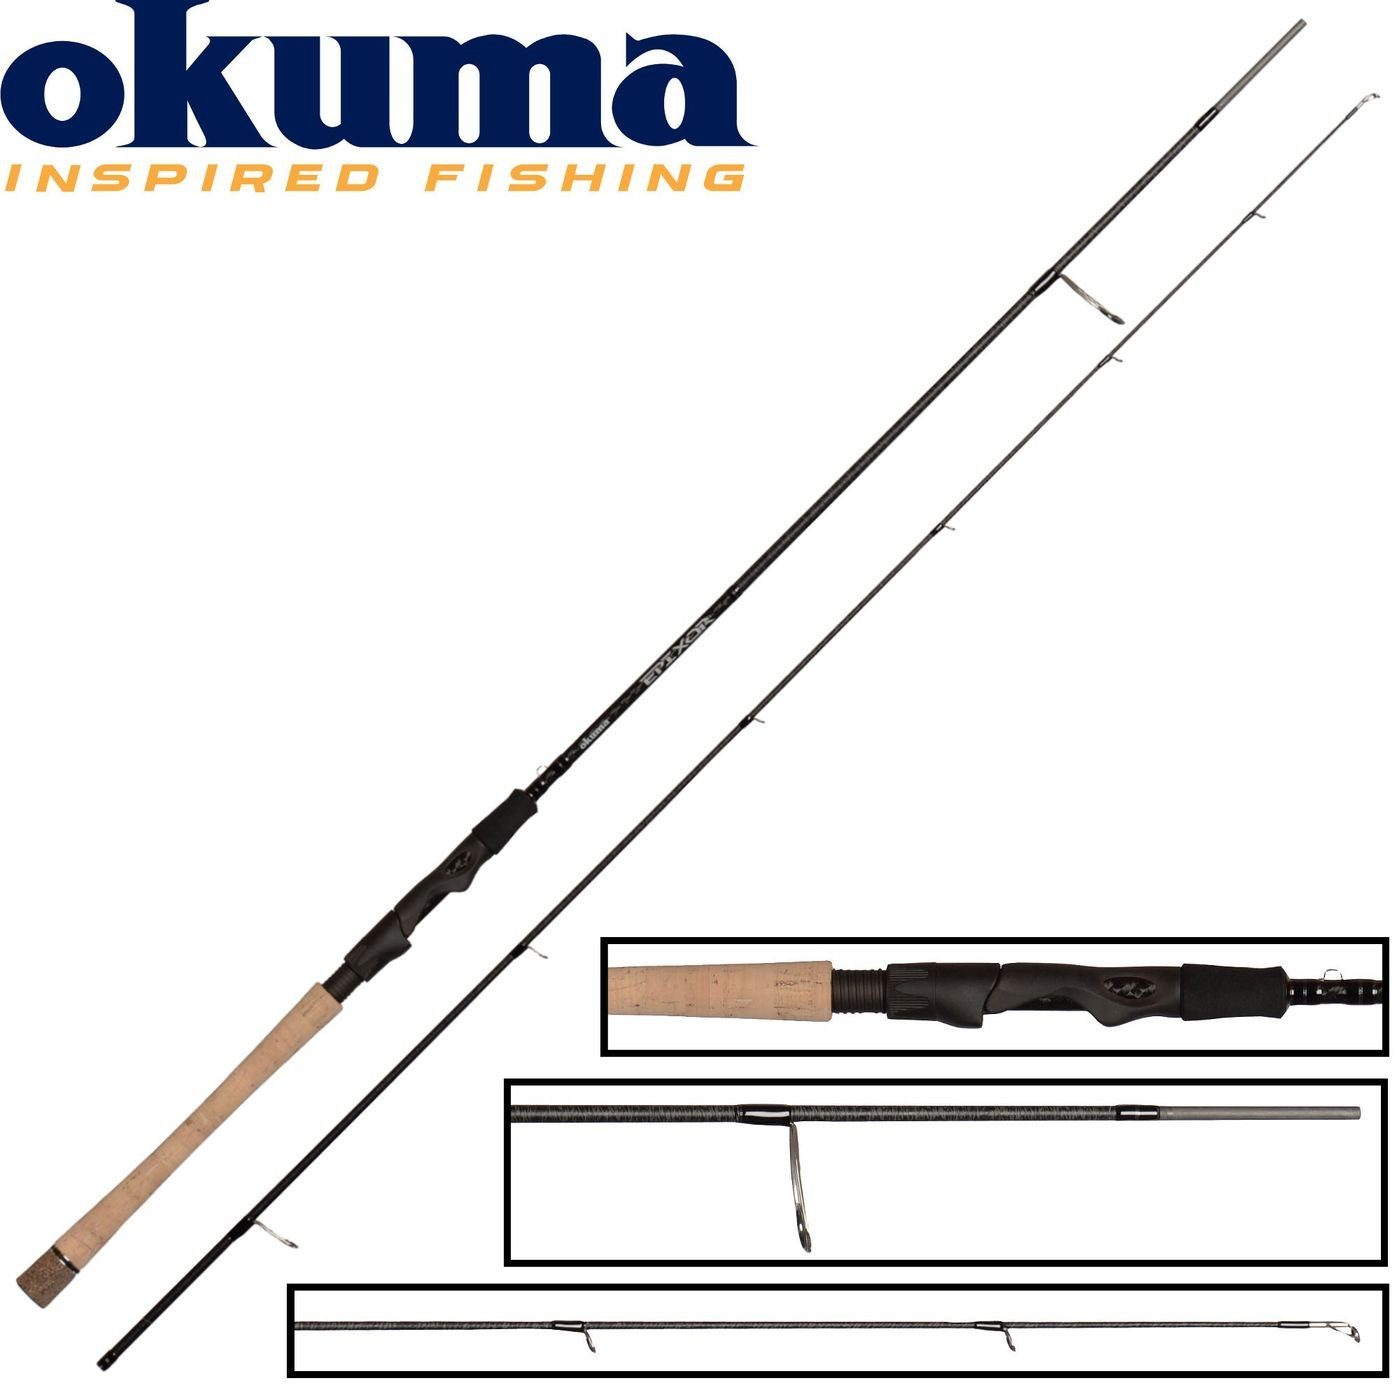 Okuma Spinnrute Okuma Epixor 276cm 10-32g - Spinnrute